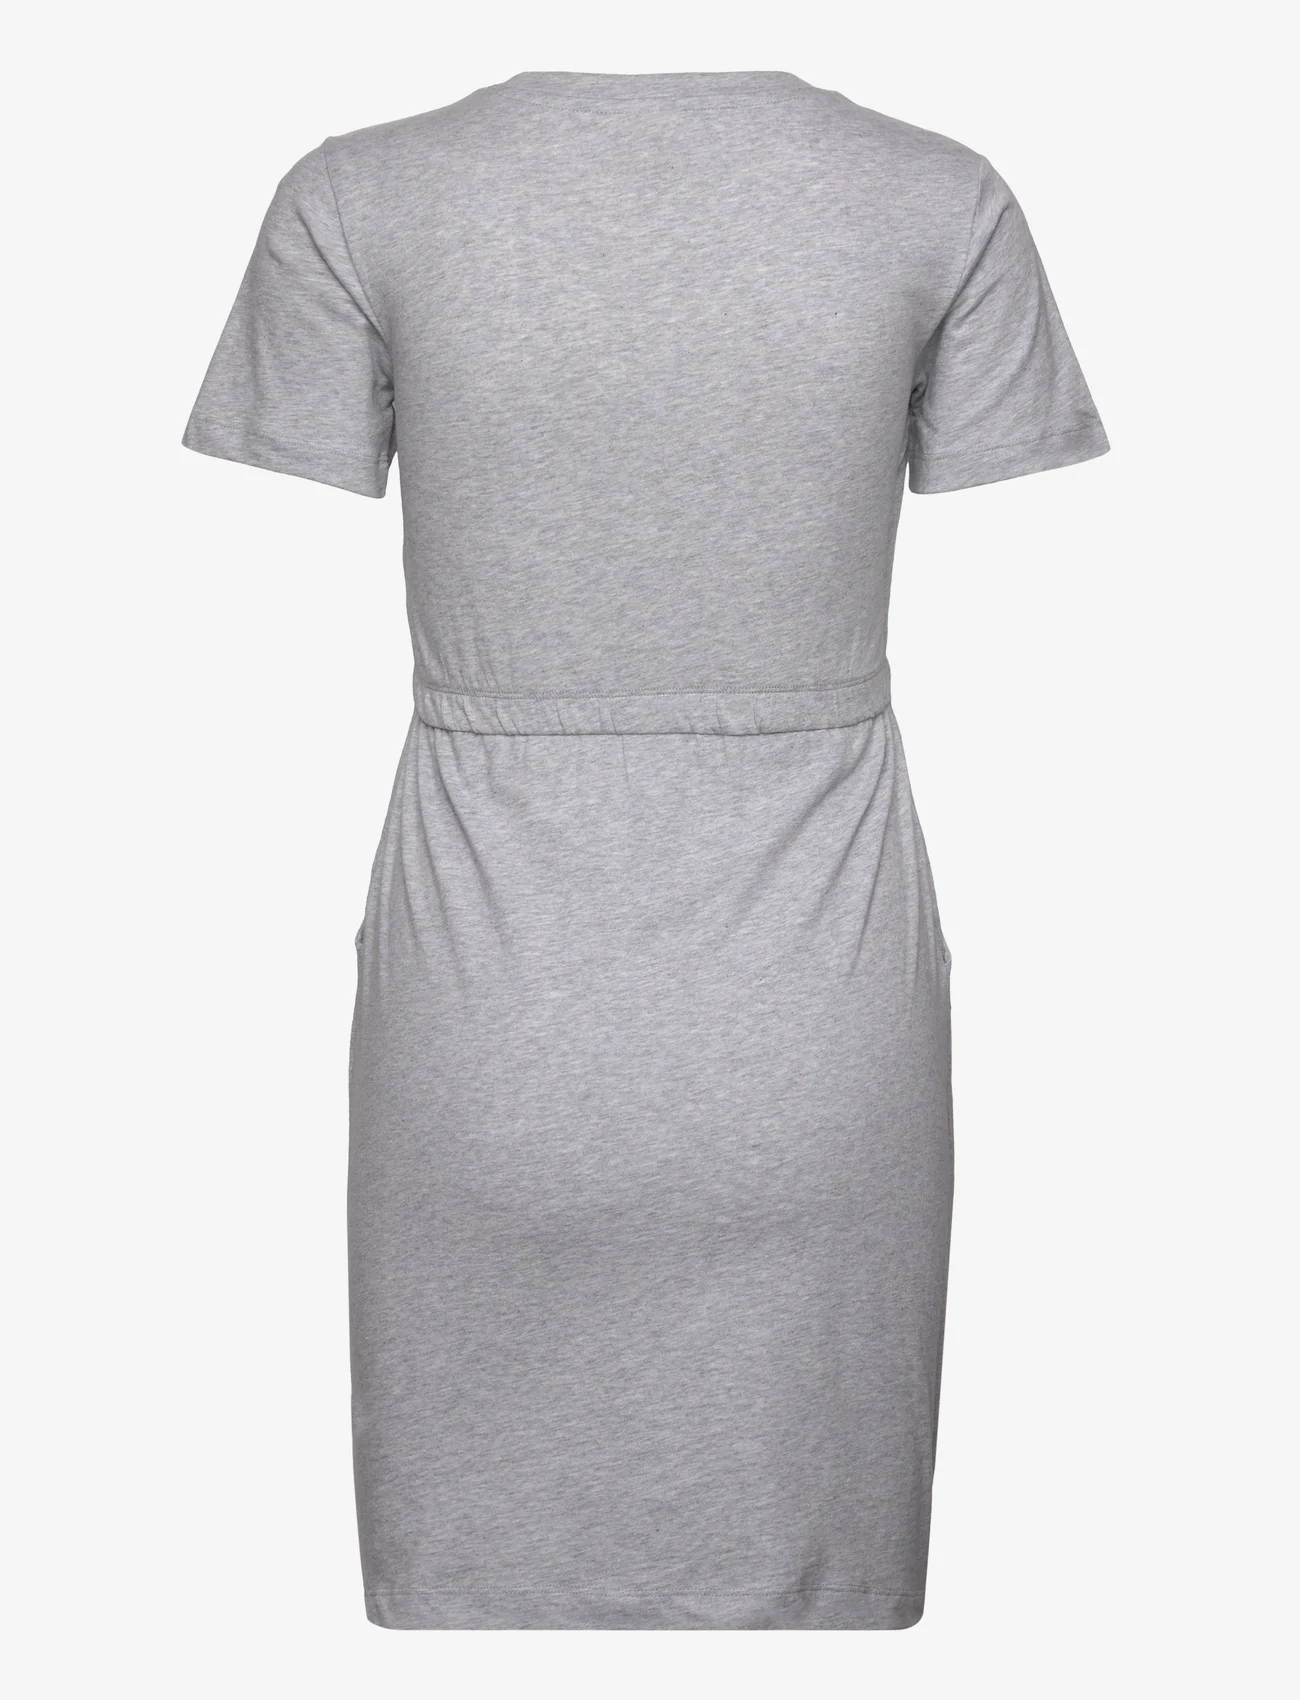 Boob - The-shirt mini dress - grey melange - 1